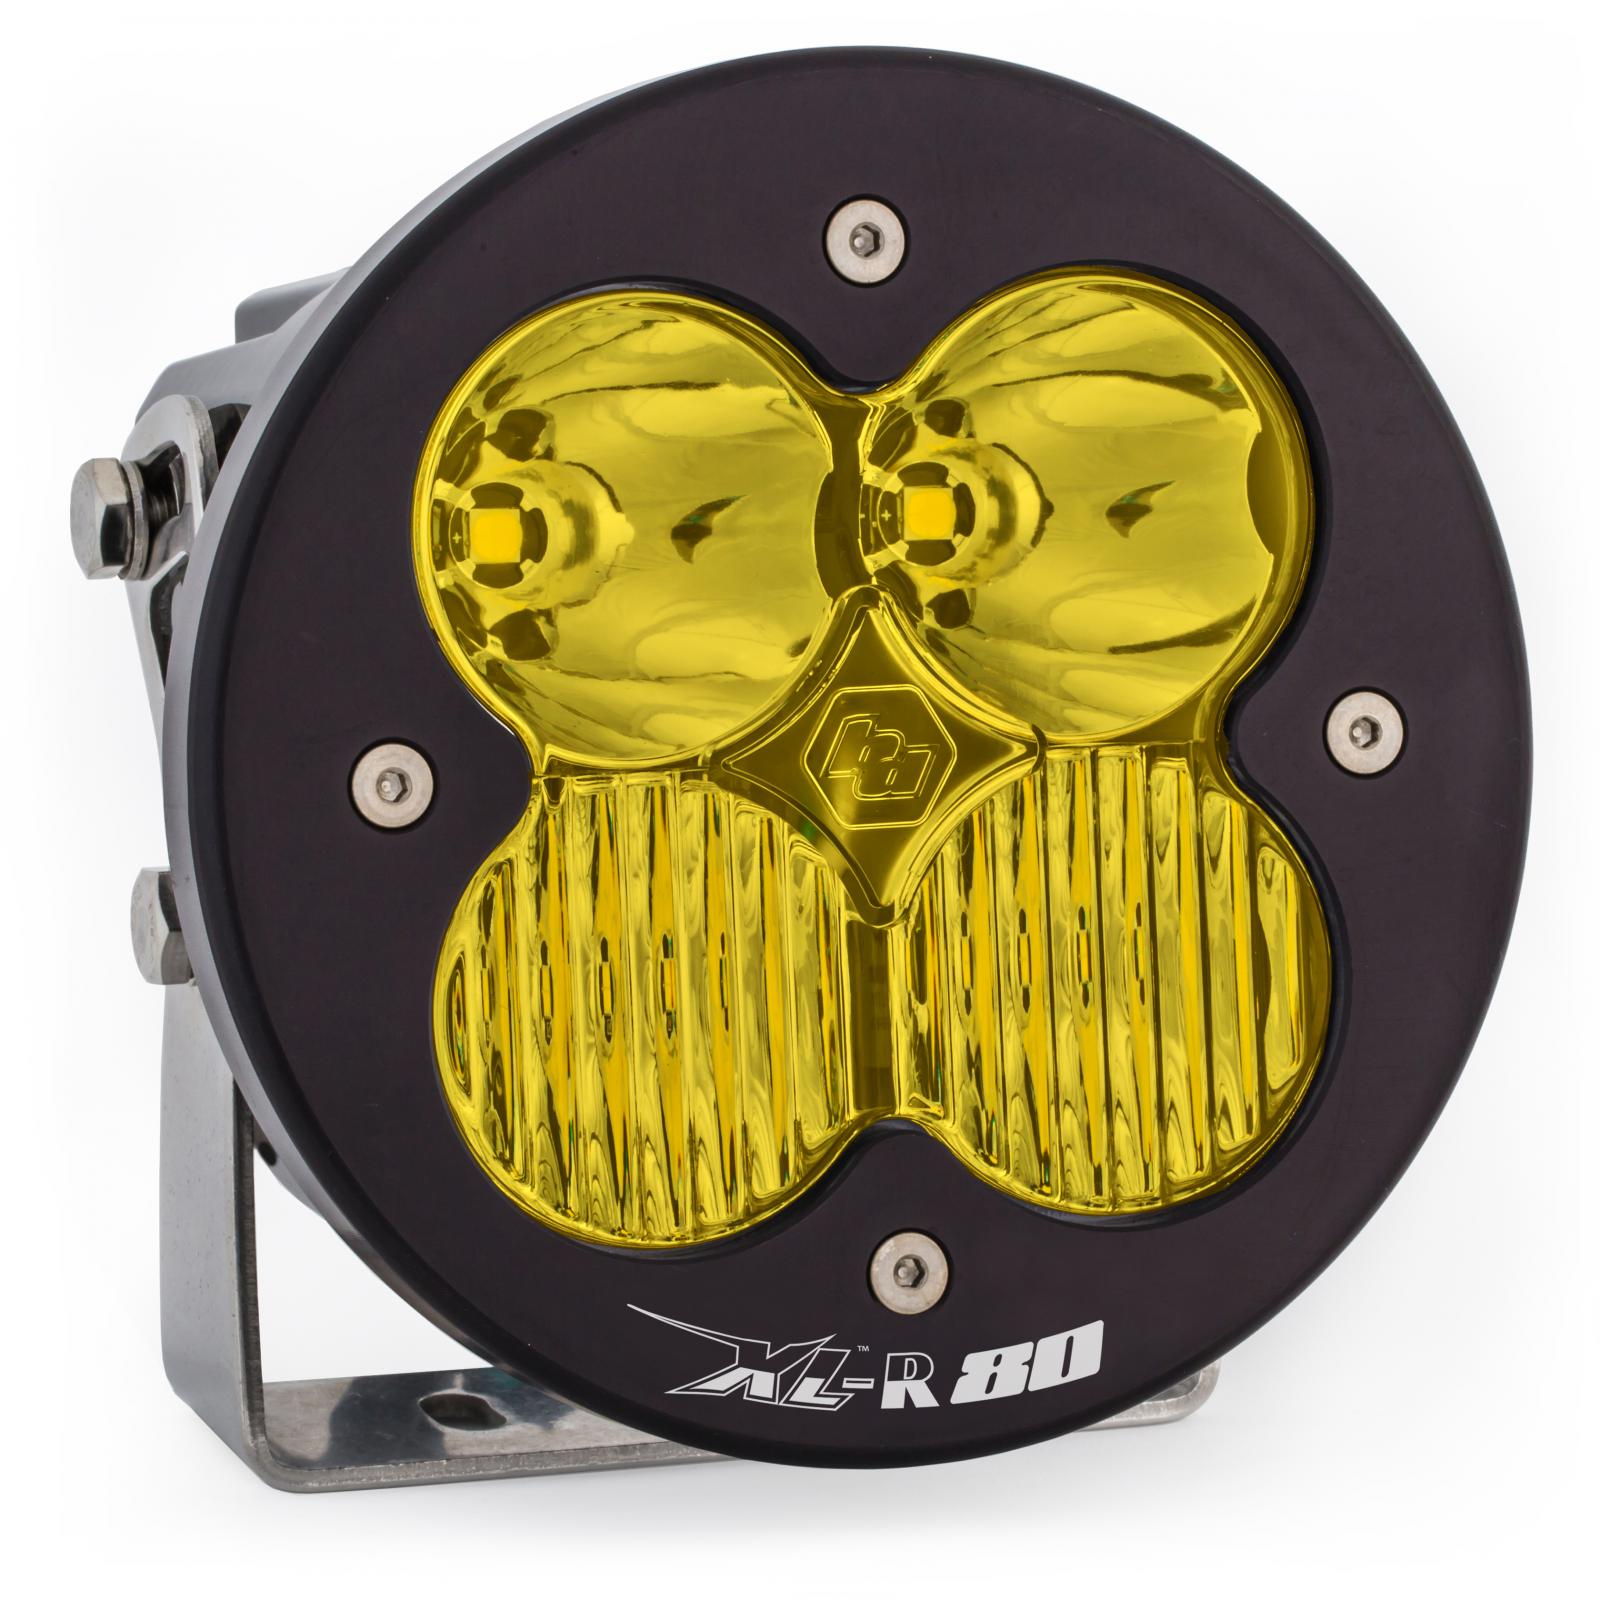 Baja Designs LED Light Pods Amber Lens Spot Each XL R 80 Driving/Combo